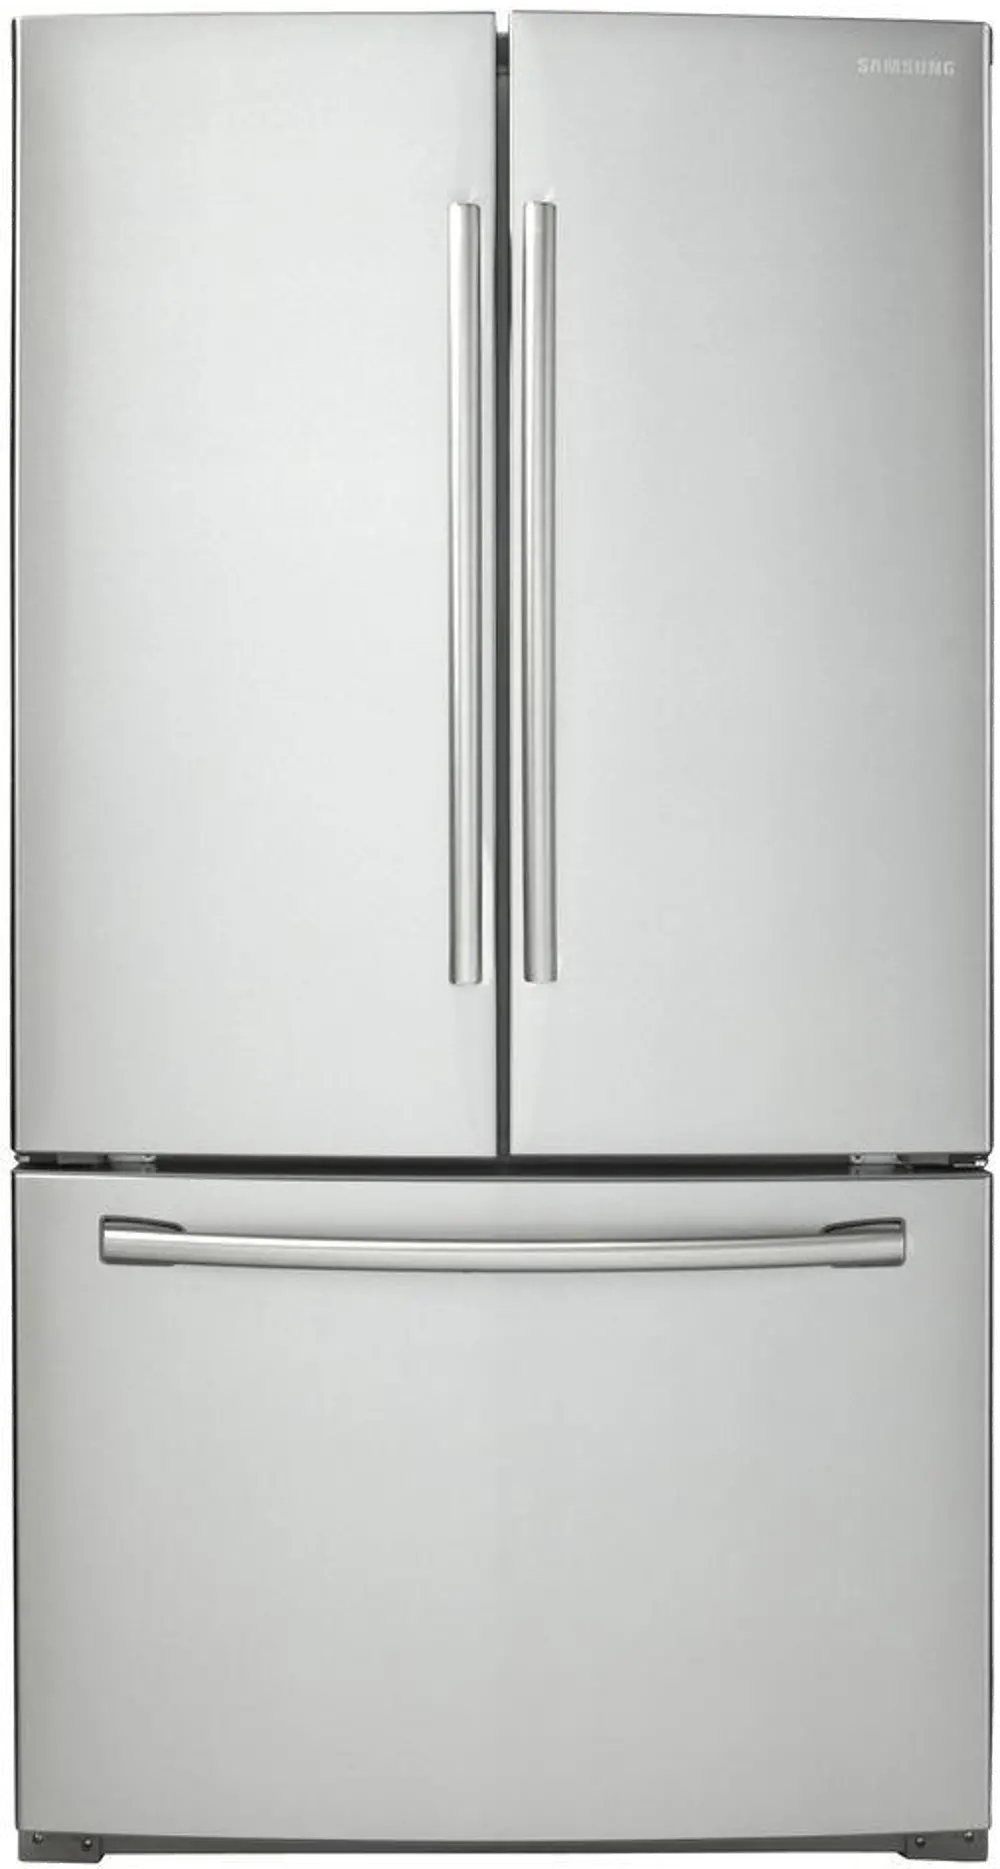 RF260BEAESR Samsung 25.5 cu ft French Door Refrigerator - Stainless Steel-1